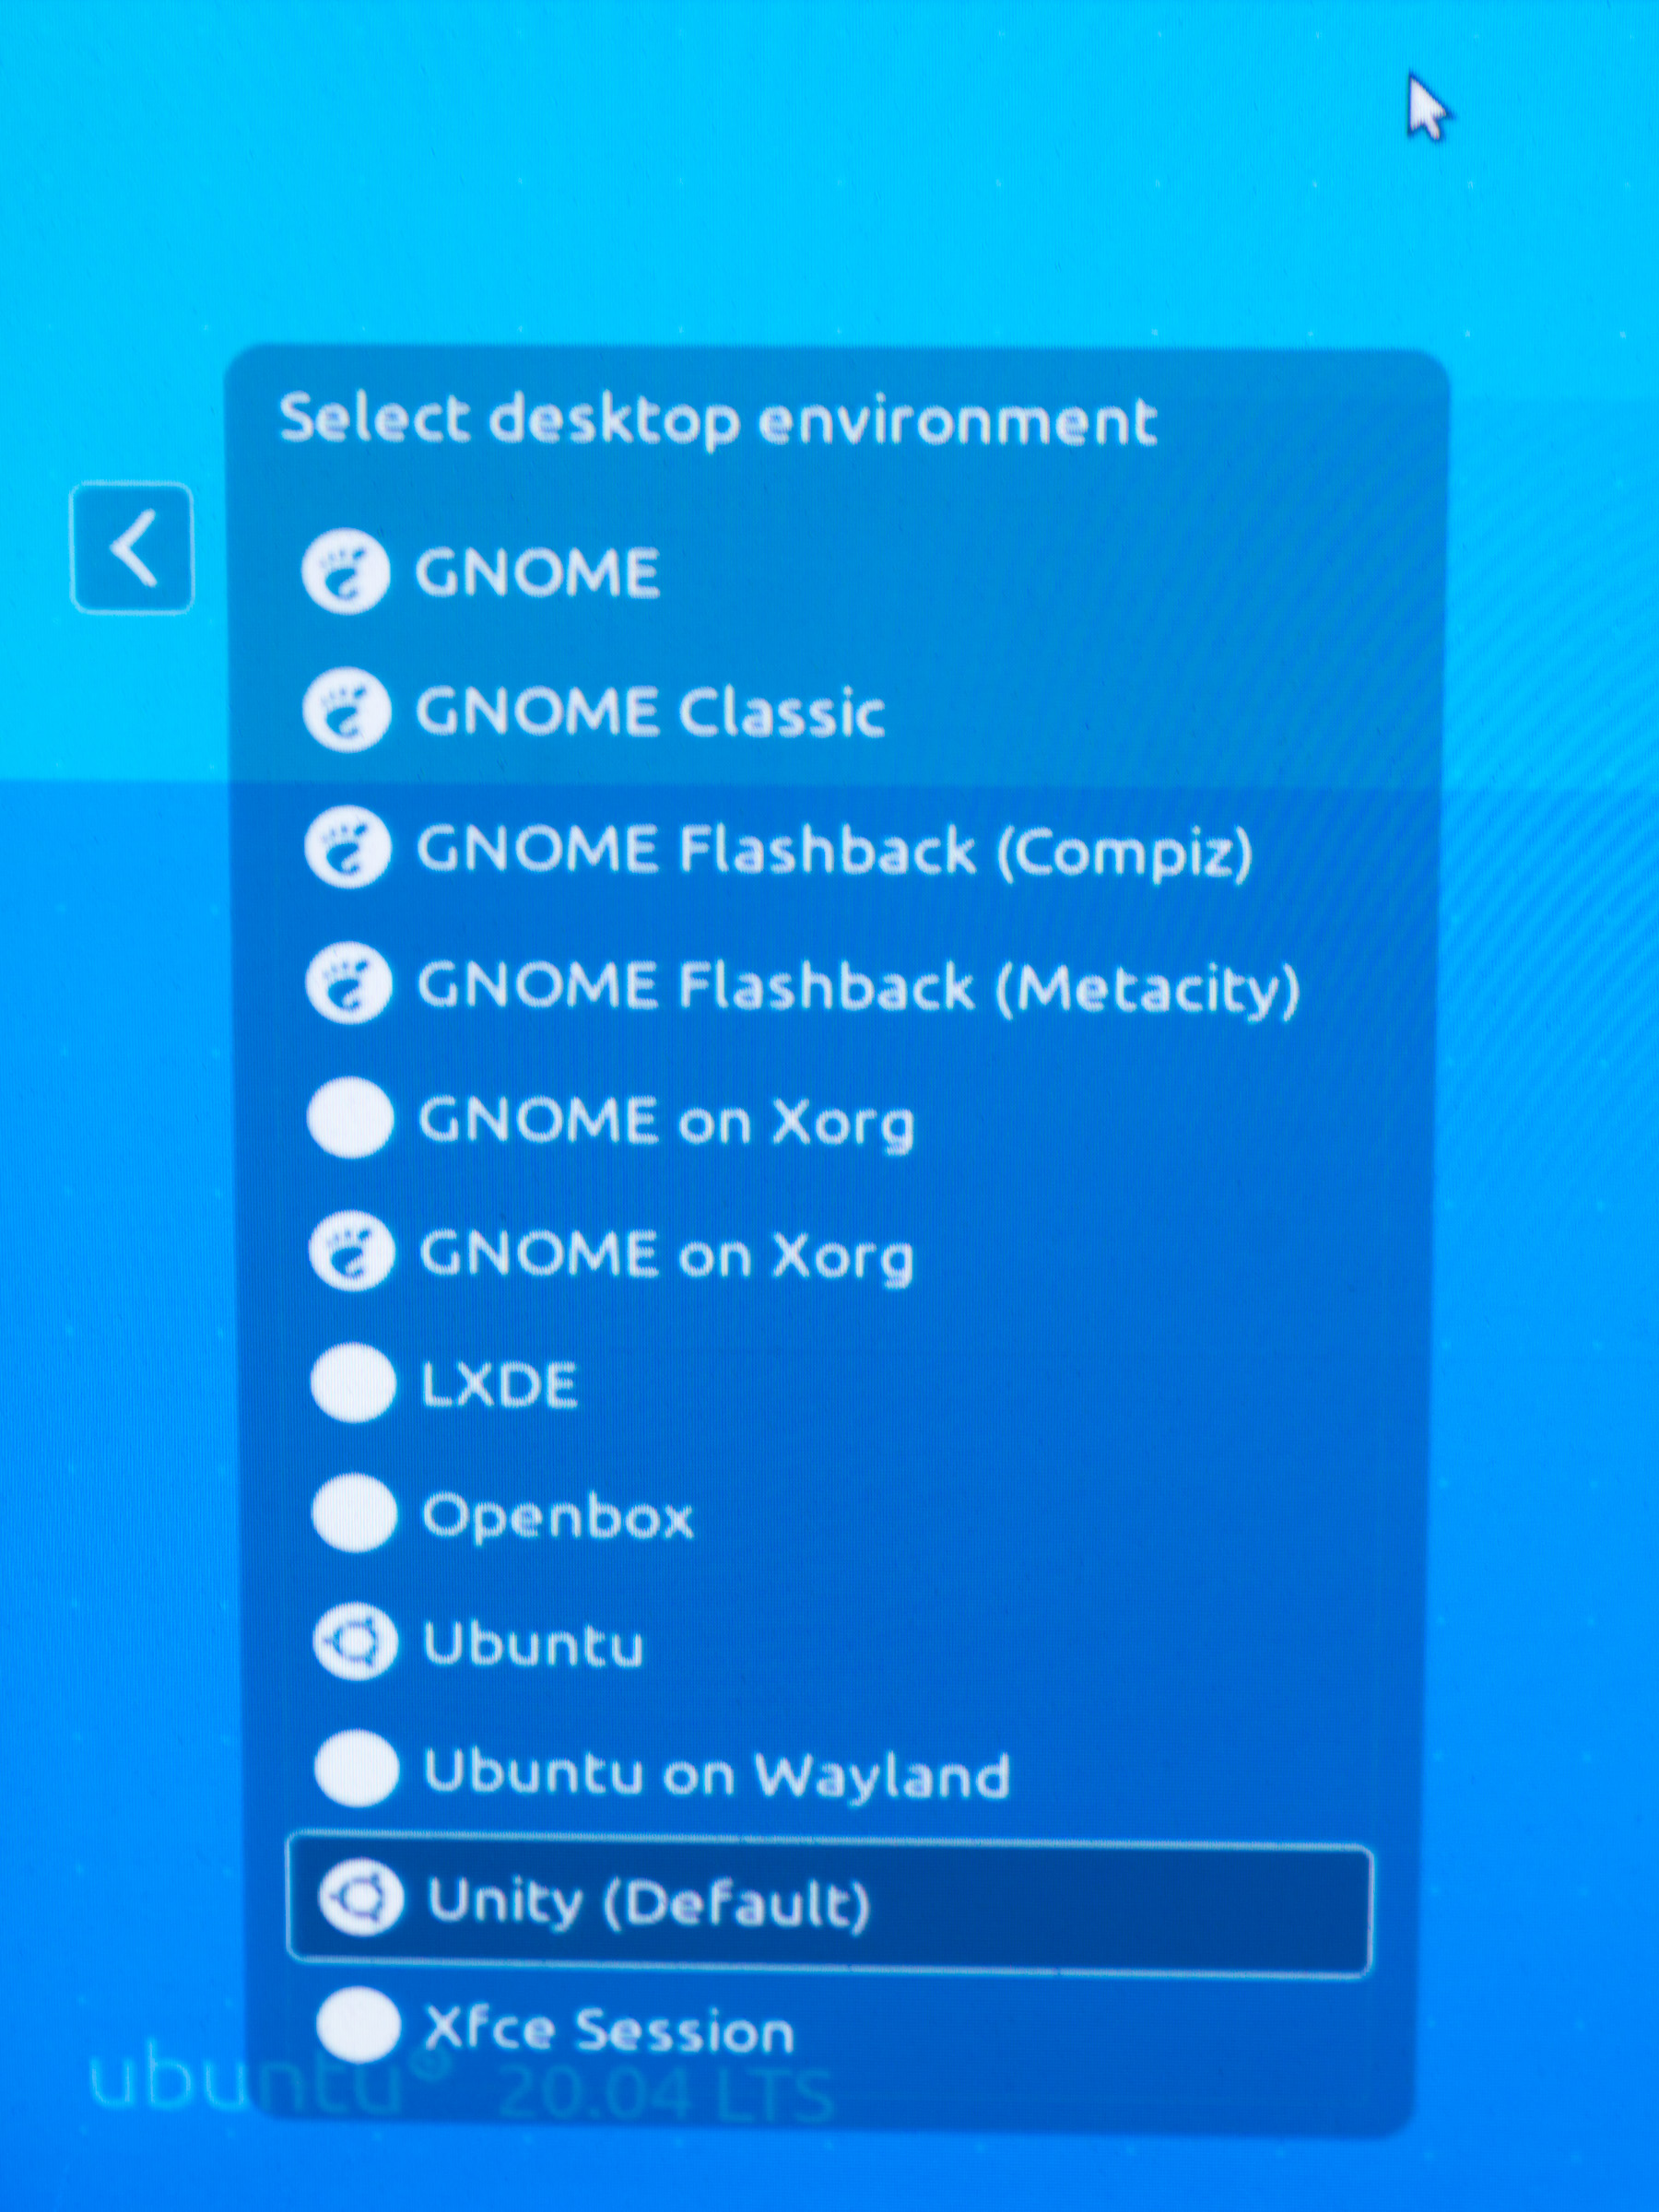 Desktop environment menu on Ubuntu.